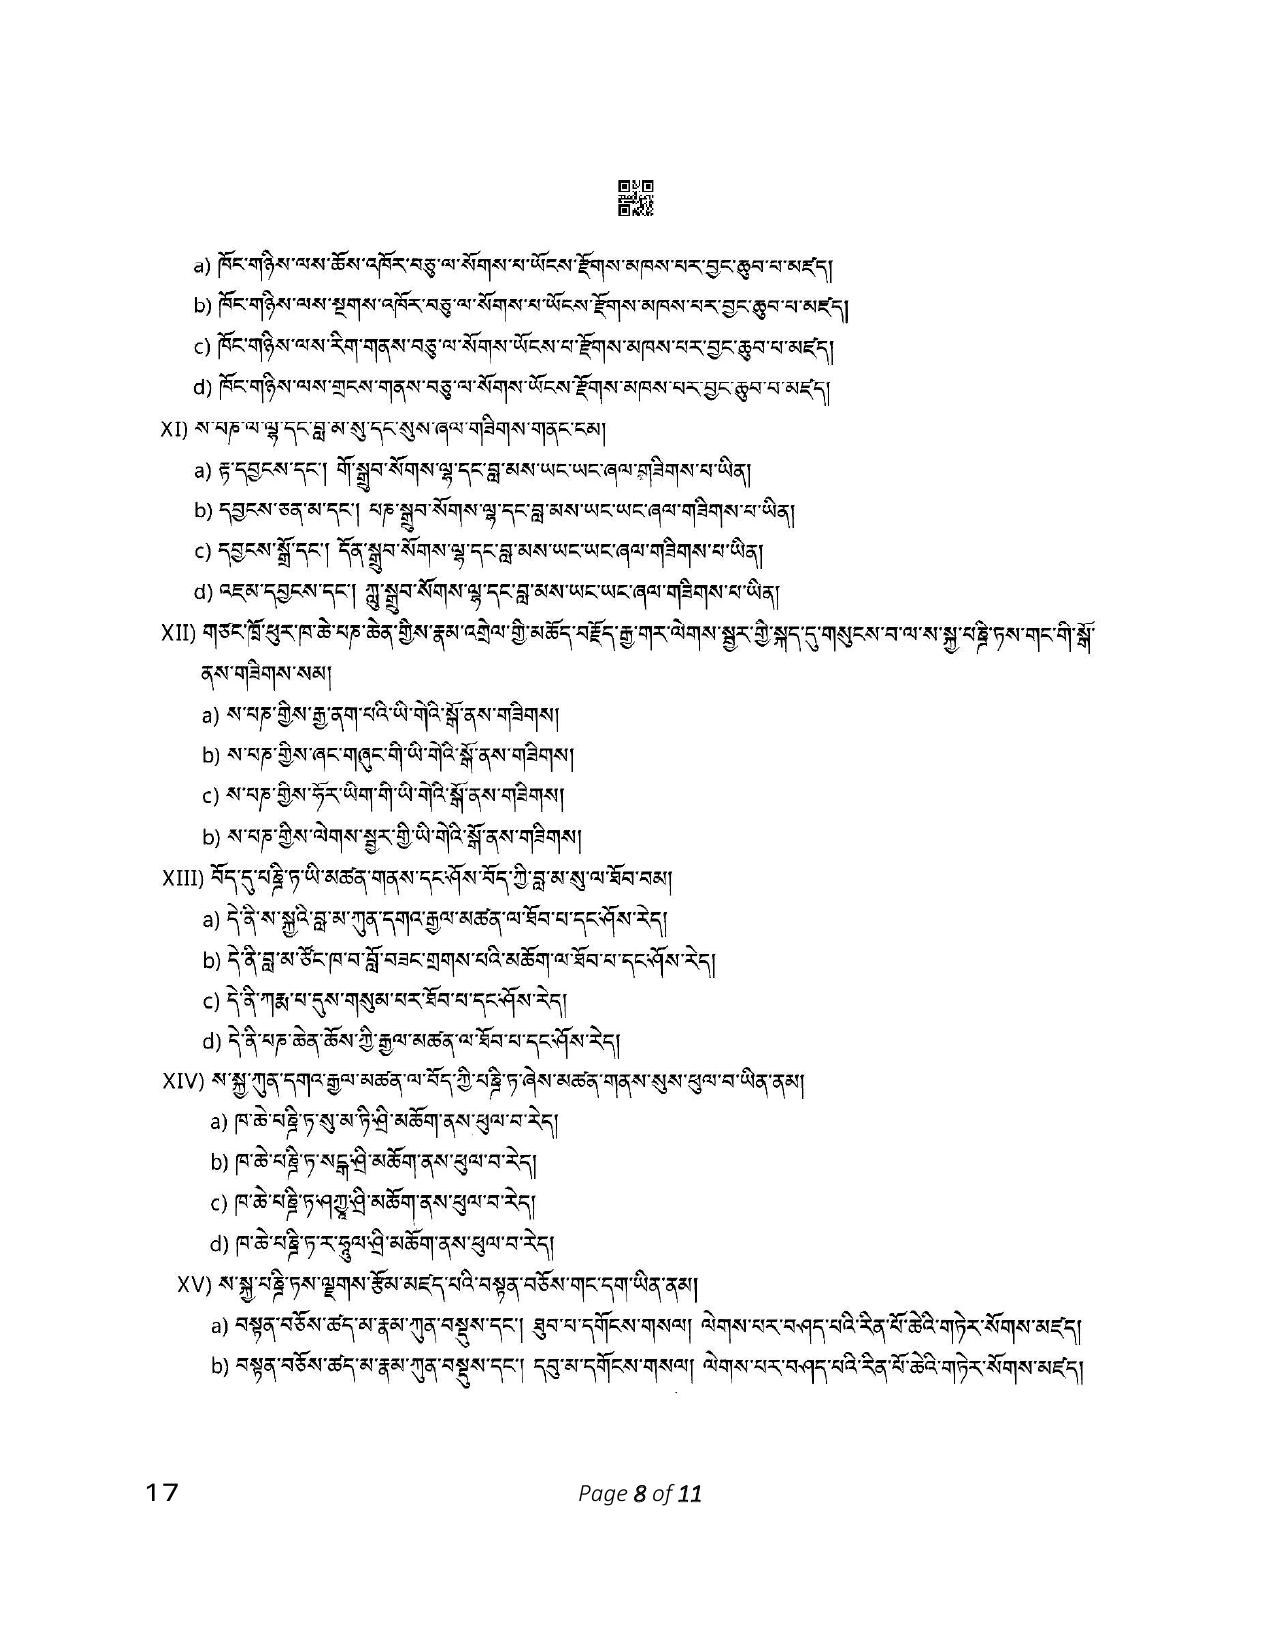 CBSE Class 12 17_Tibetan 2023 Question Paper - Page 8